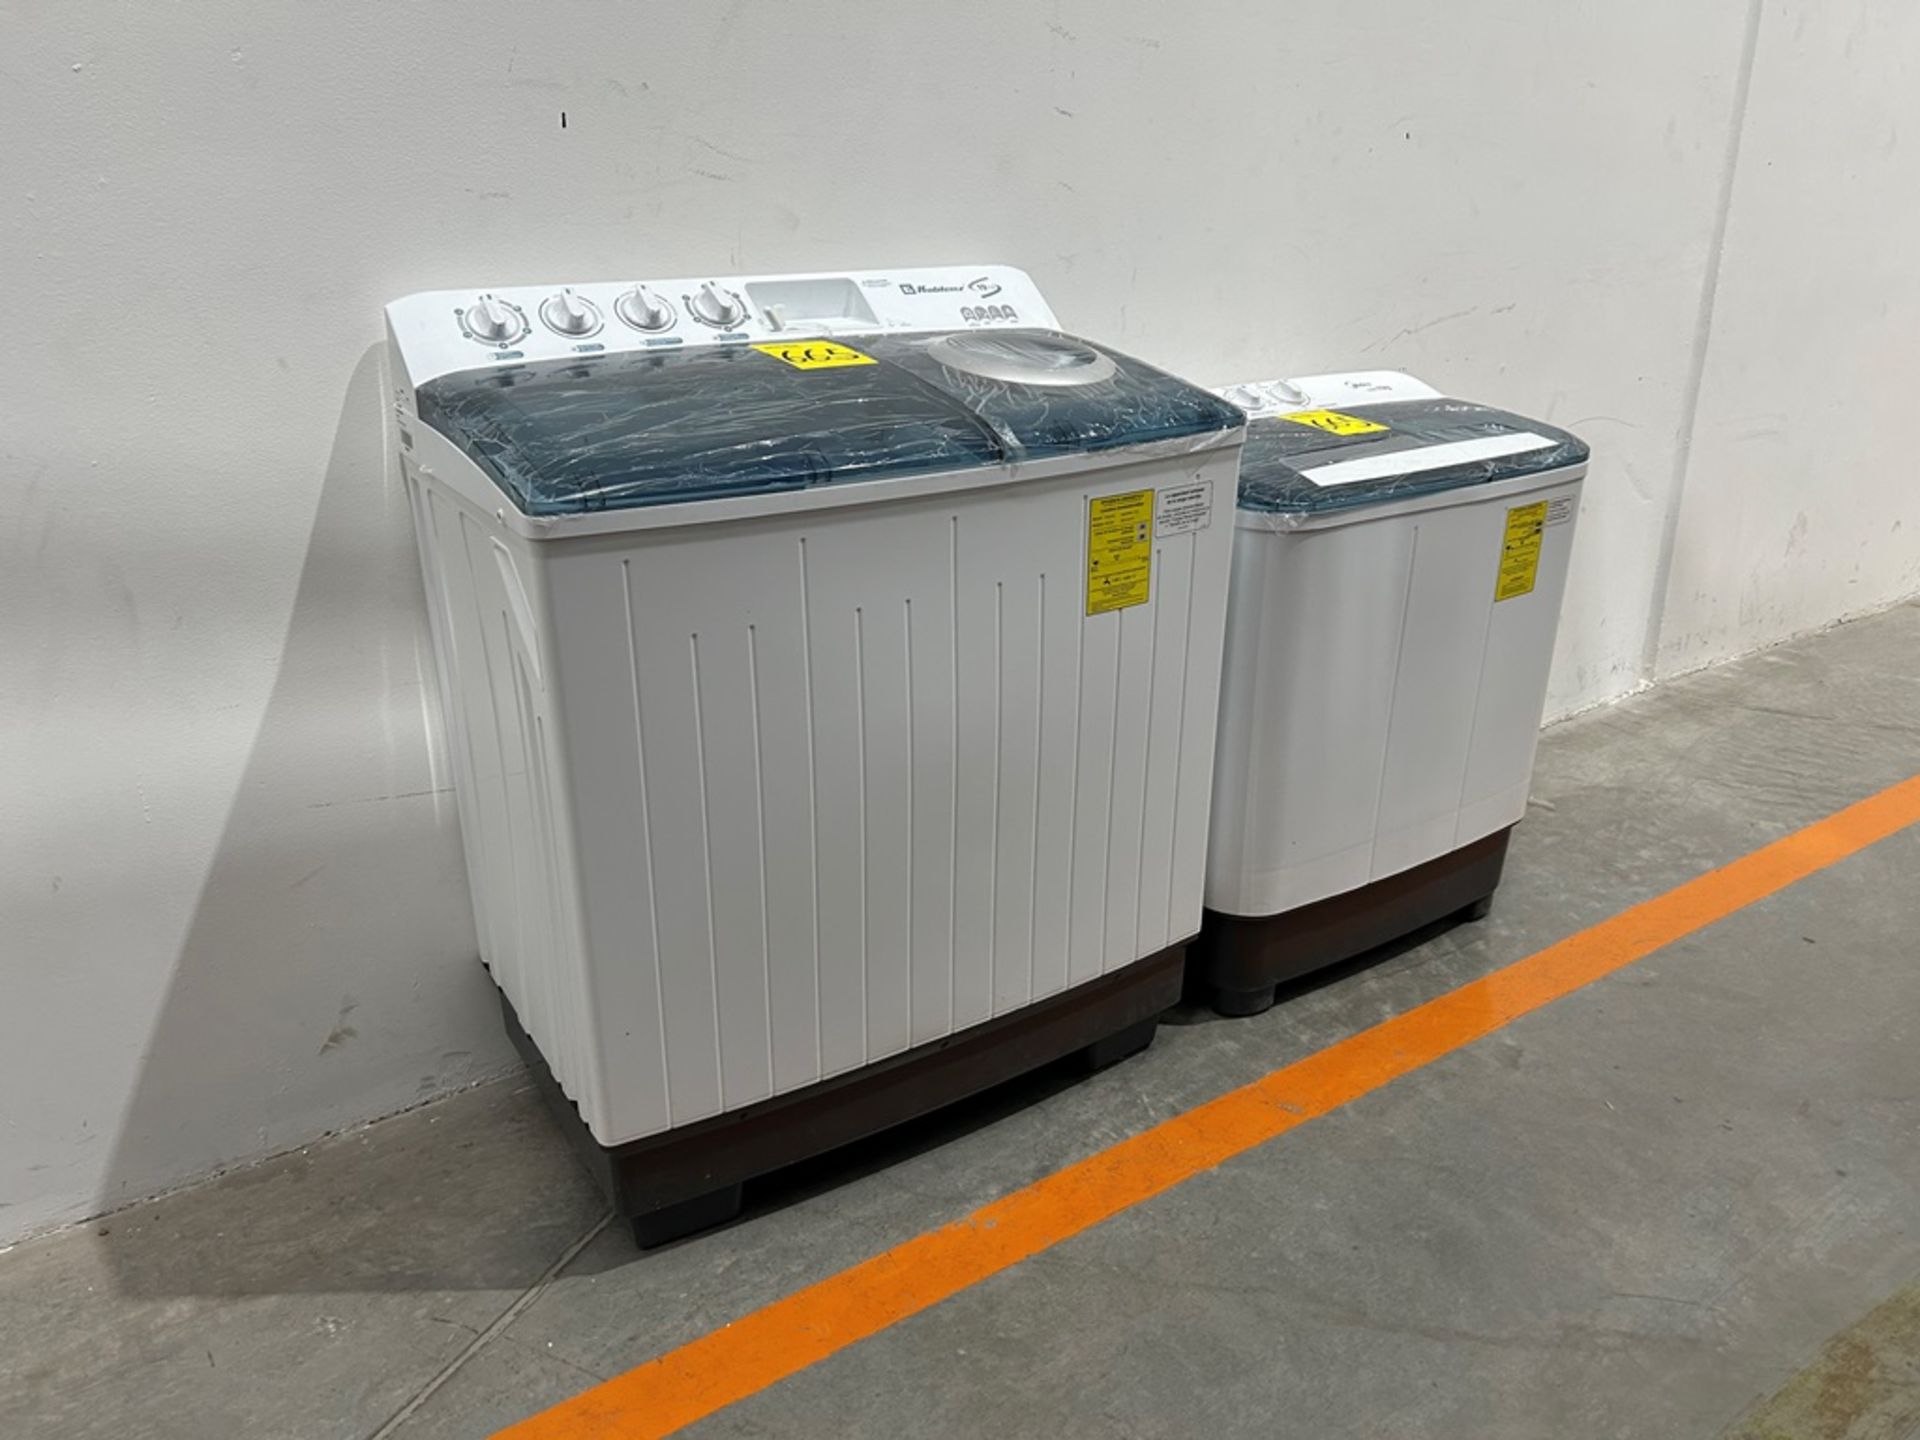 Lote de 2 lavadoras contiene: 1 Lavadora de 19 KG, Marca KOBLENZ, Modelo LMD19B, Serie 02599, Color - Image 3 of 10